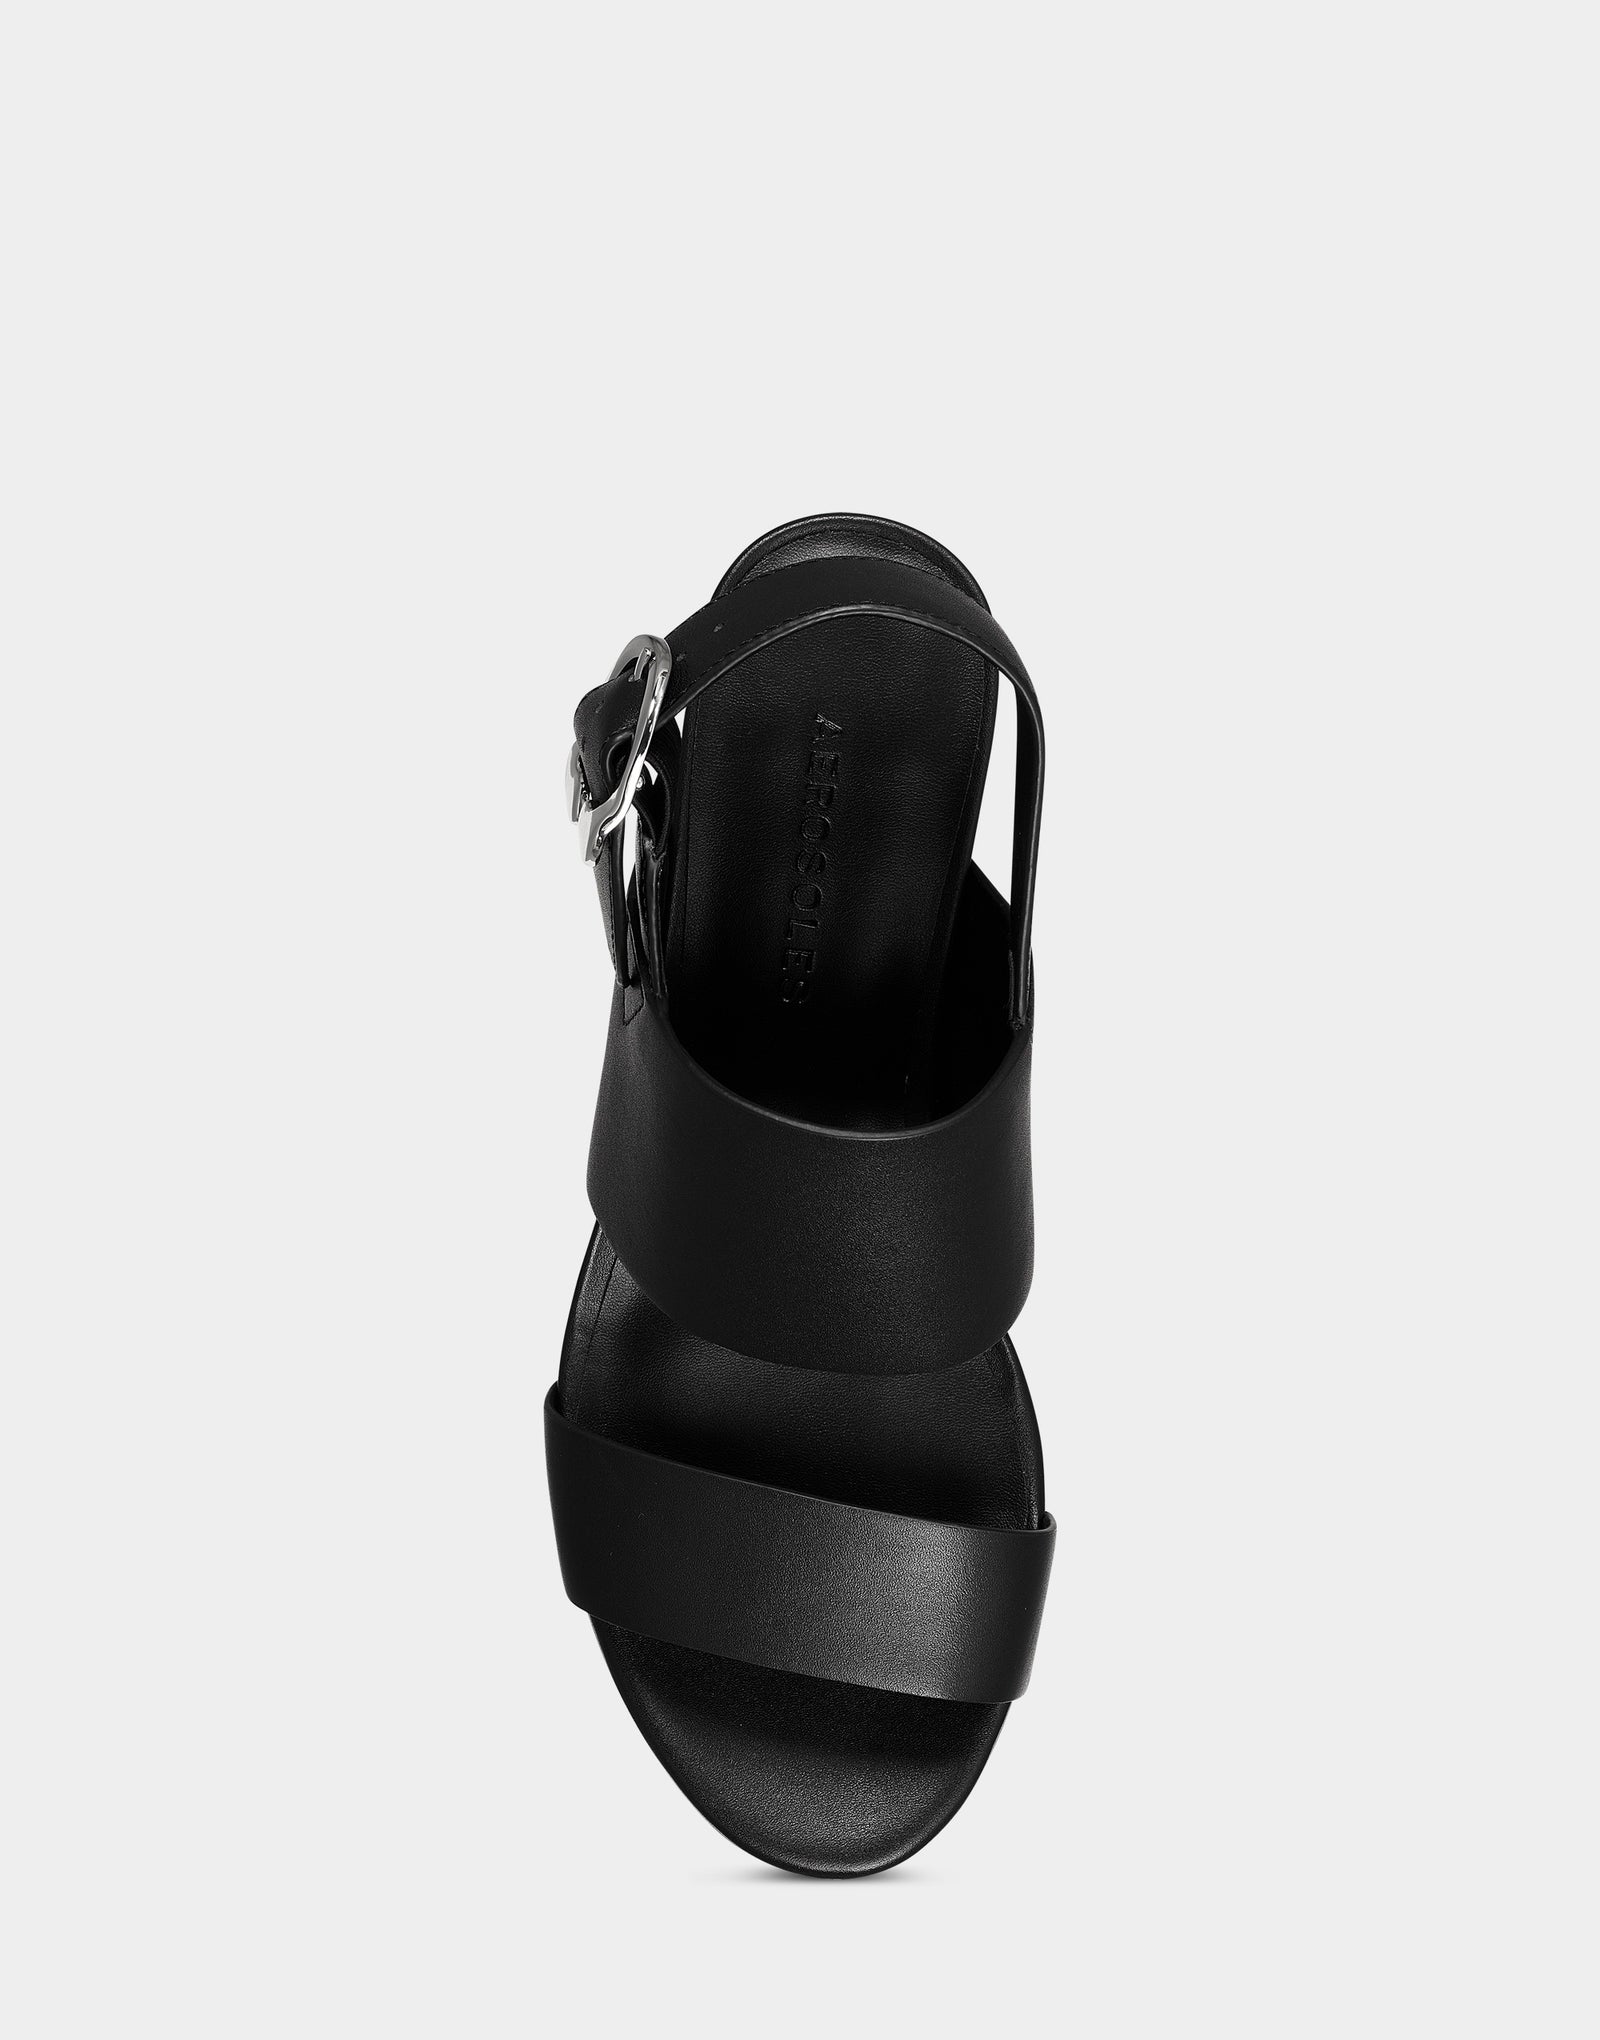 Women's Platform Sandal in Black Leather